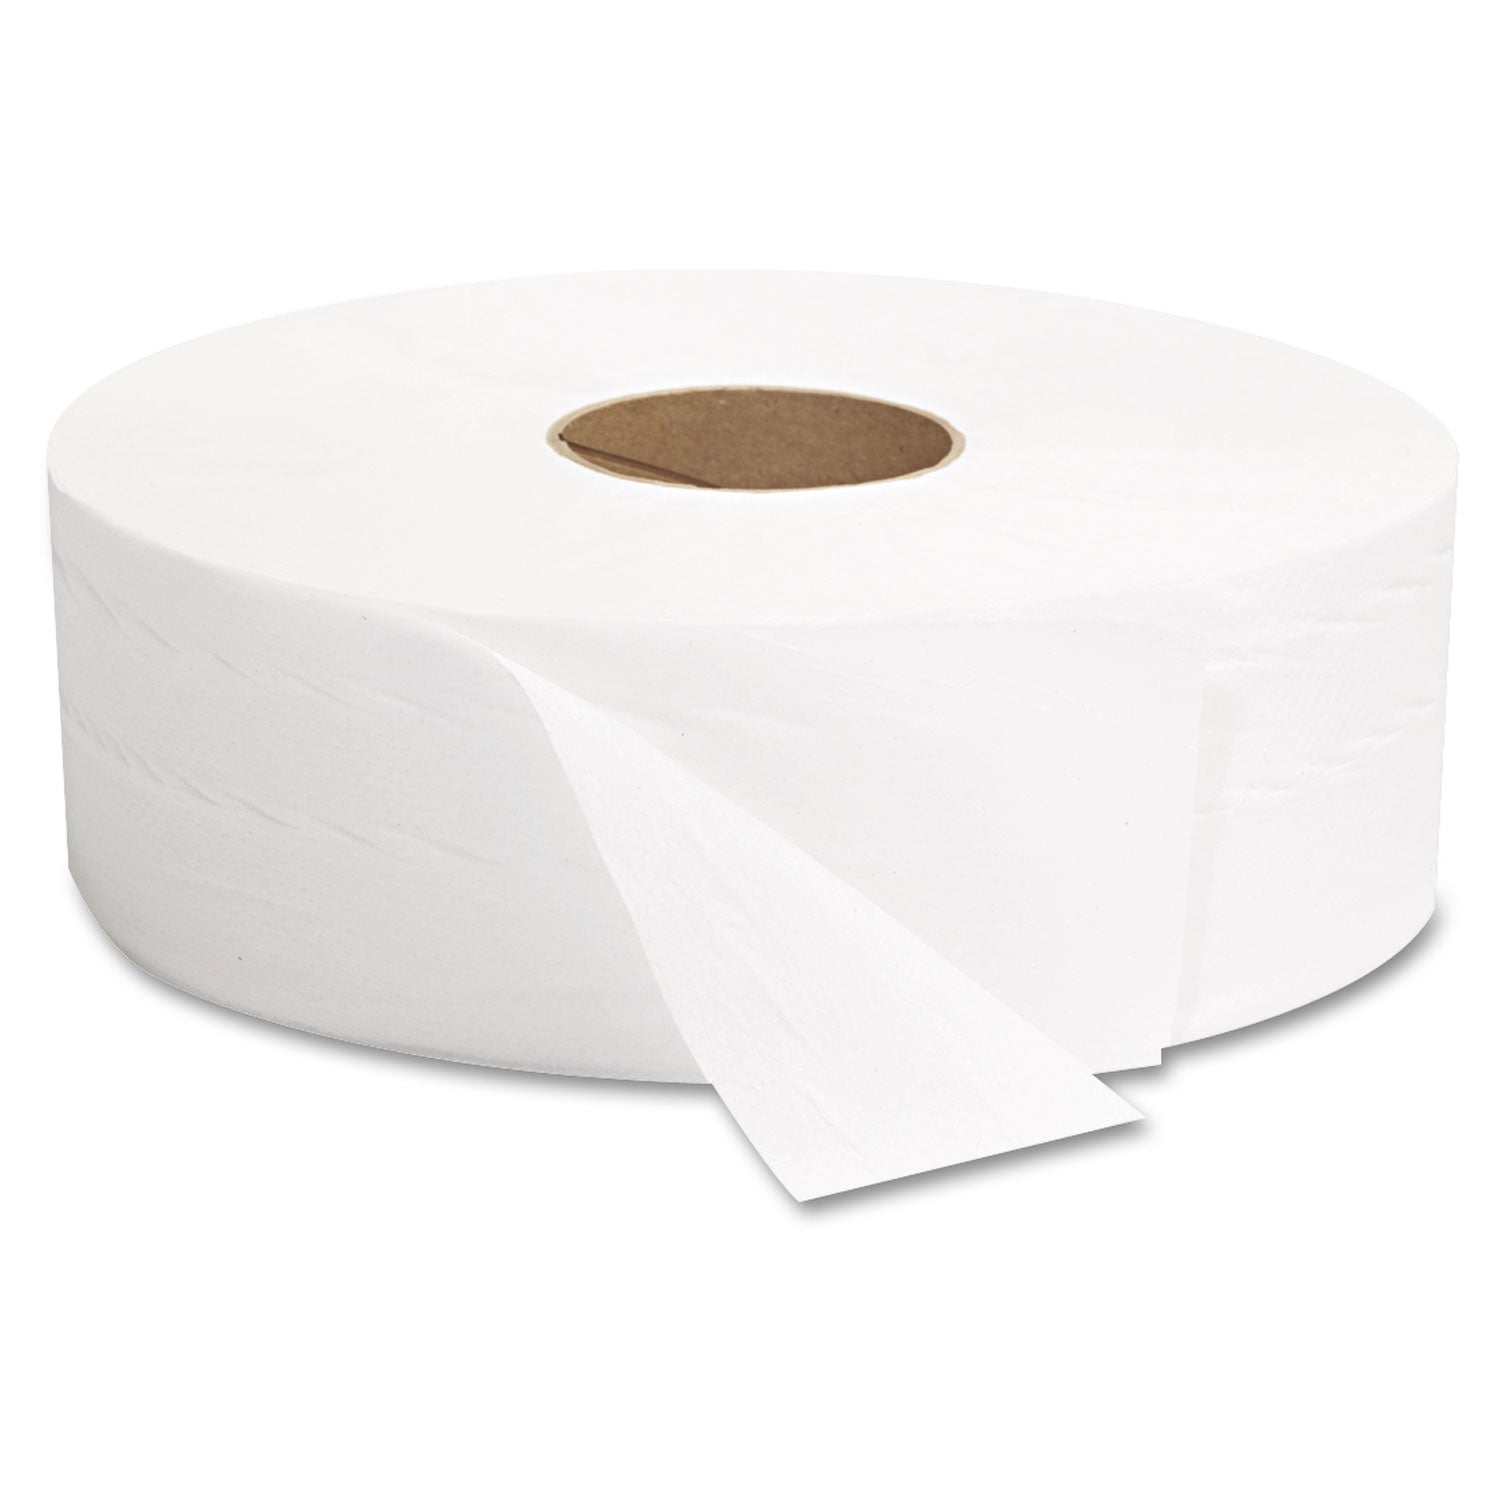 jrt-jumbo-bath-tissue-septic-safe-2-ply-white-33-x-1375-ft-12-dia-6-rolls-carton_gen1513 - 5